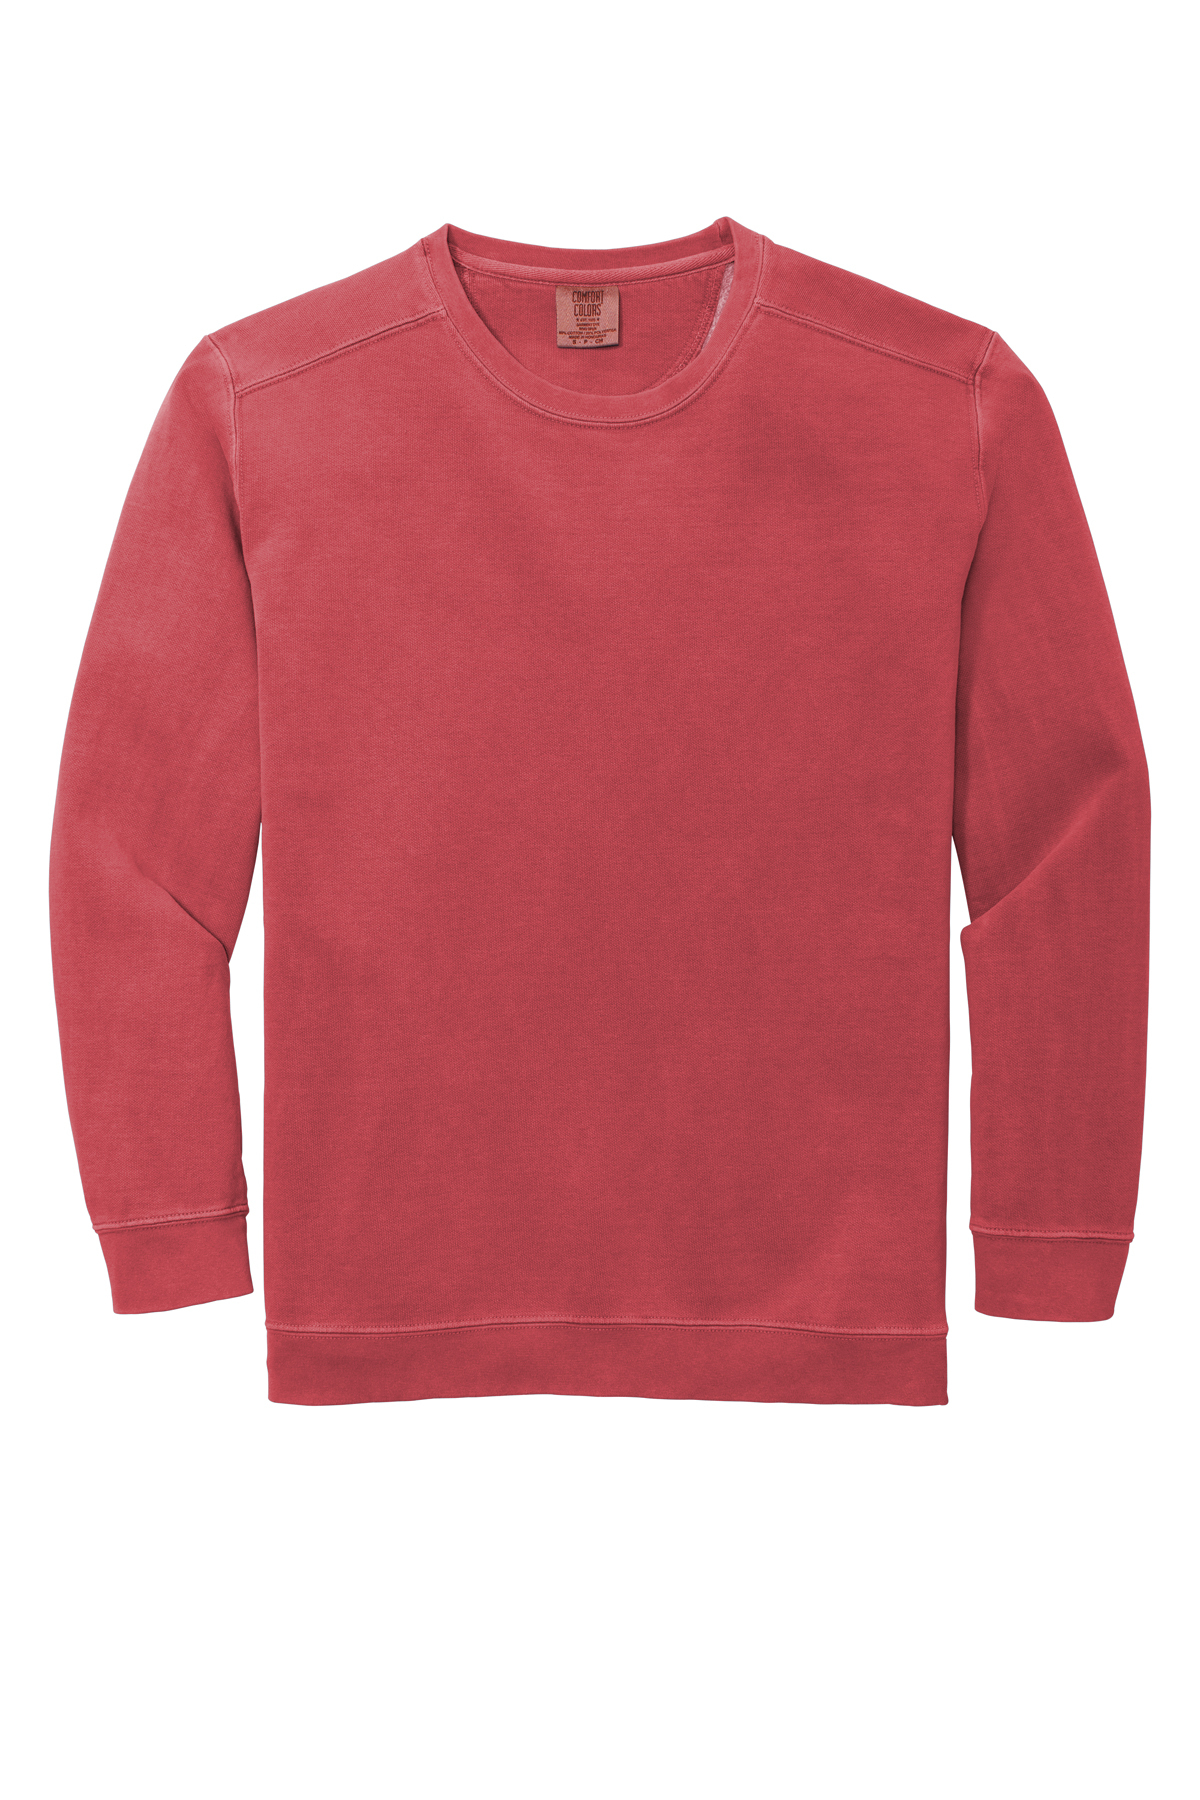 Comfort Colors 1566, Ring Spun Crewneck Sweatshirt